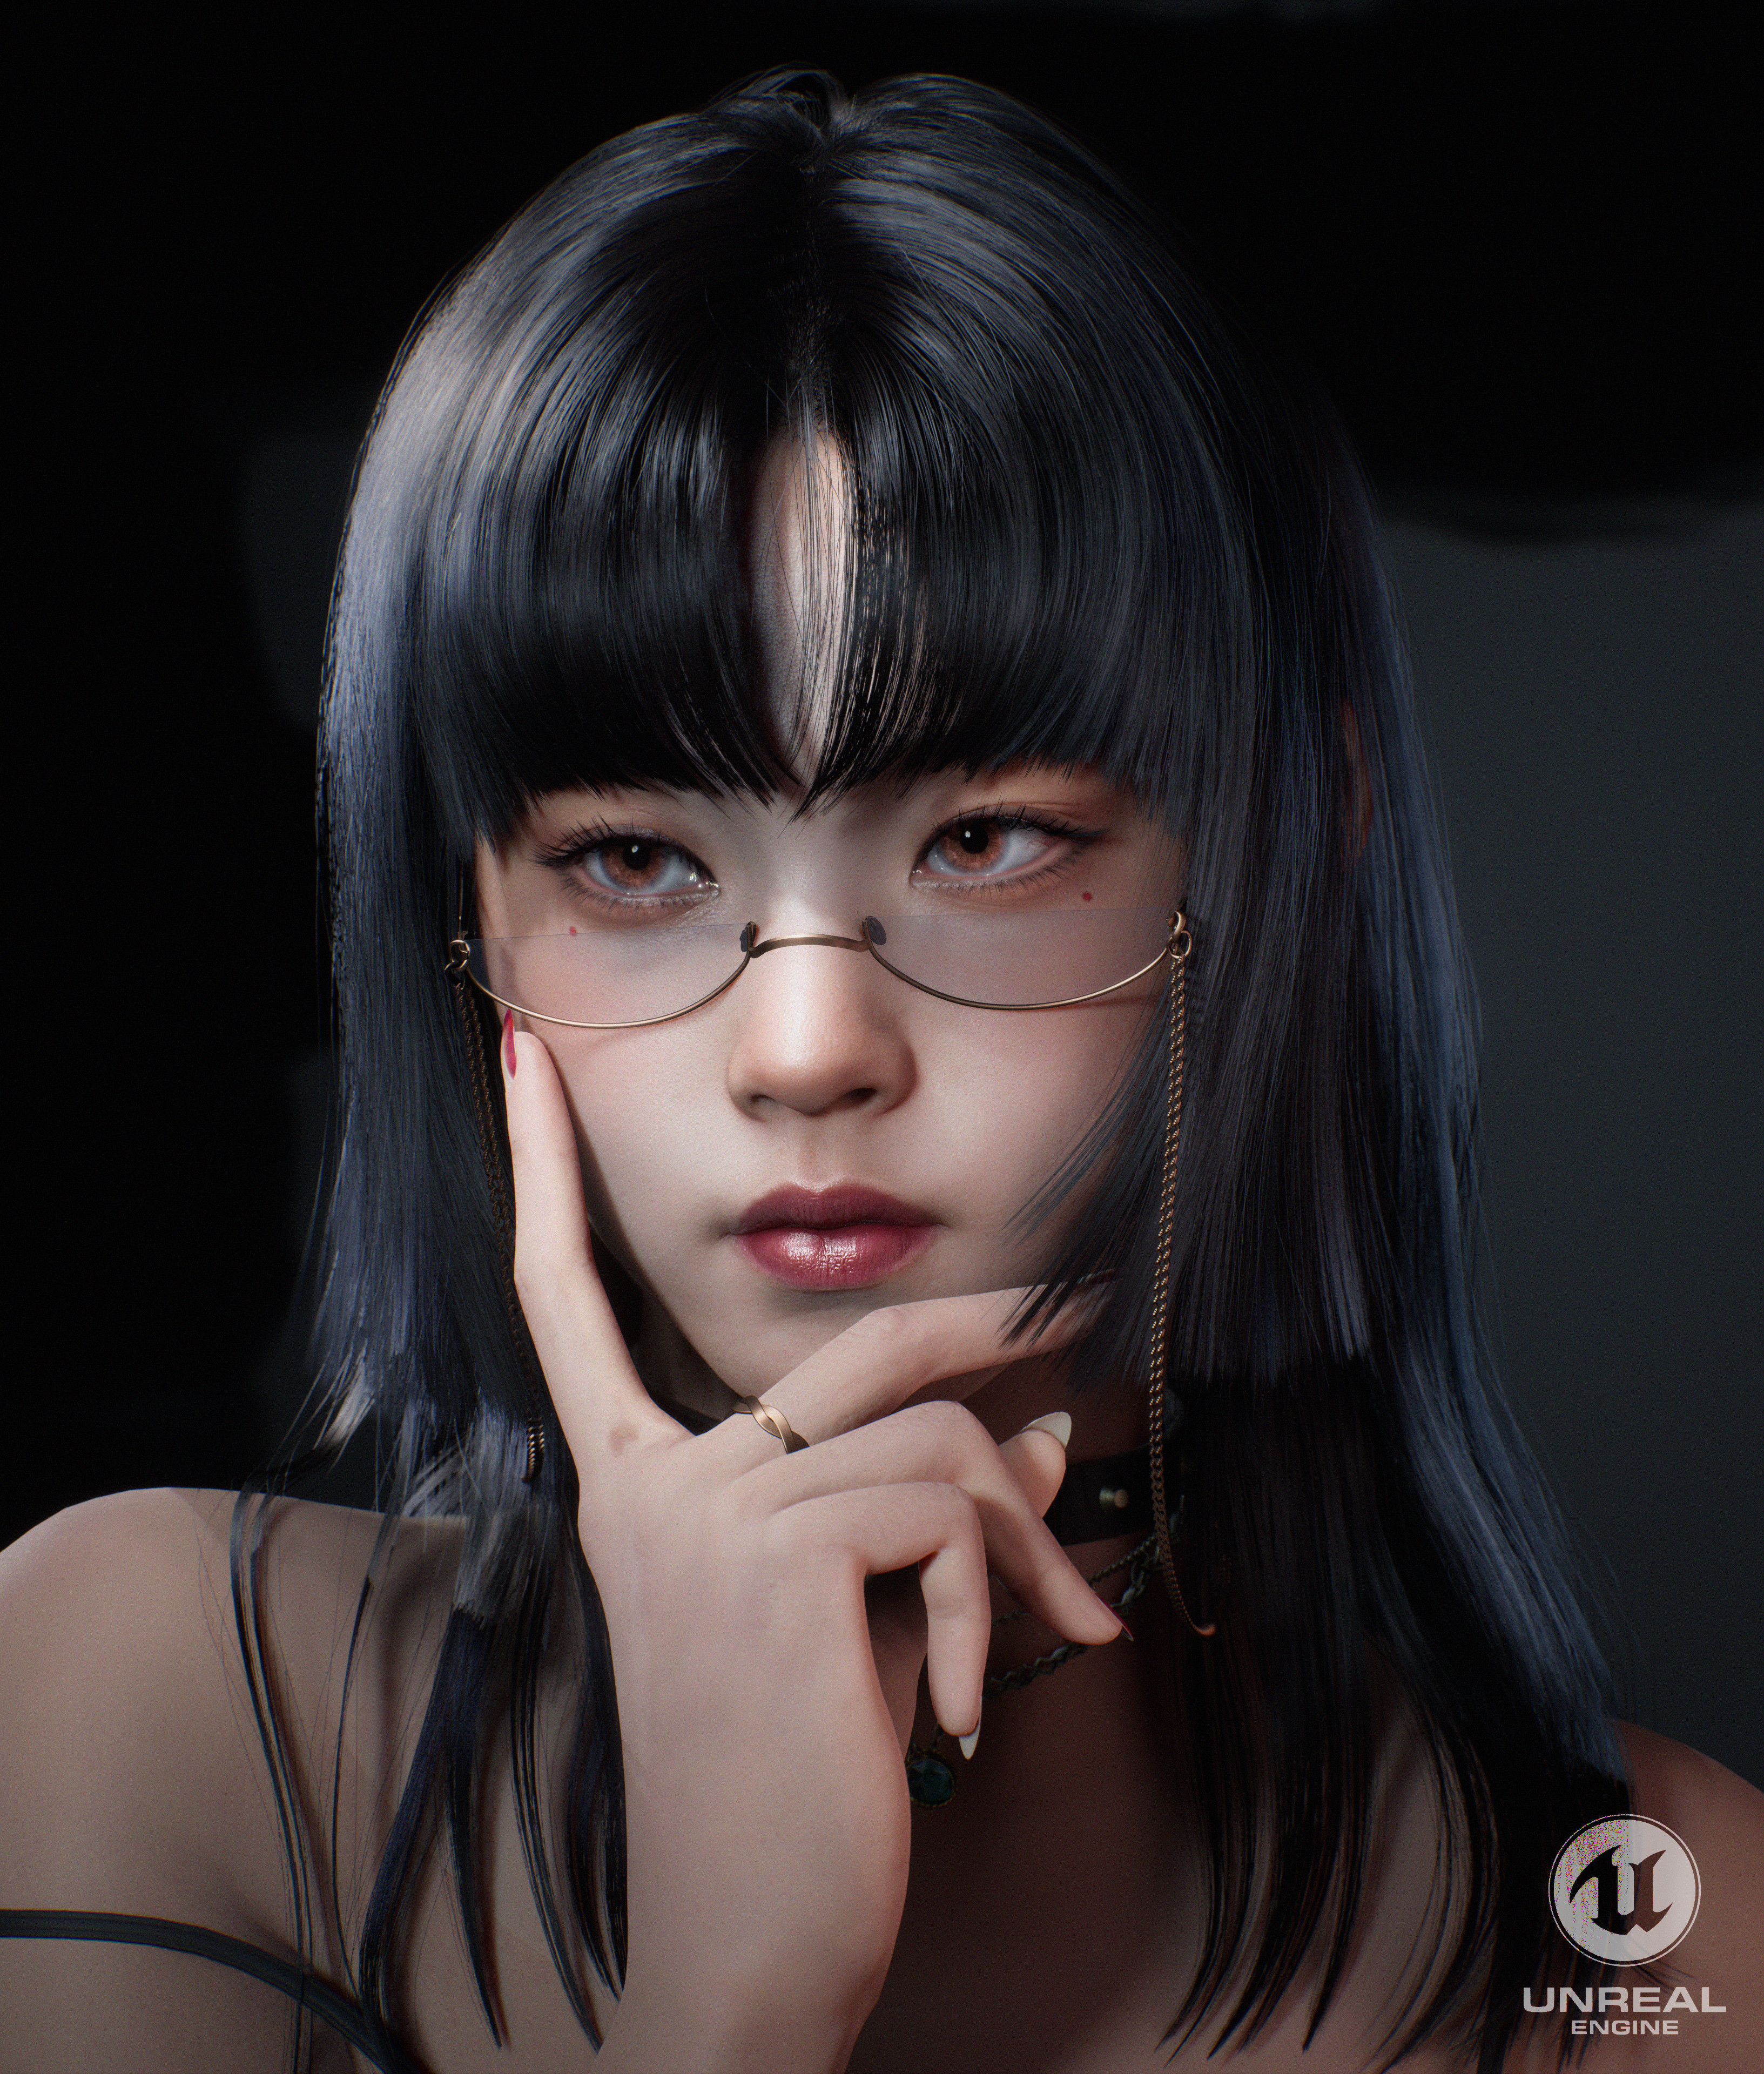 General 3266x3840 Glow Zhao CGI women dark hair glasses looking away